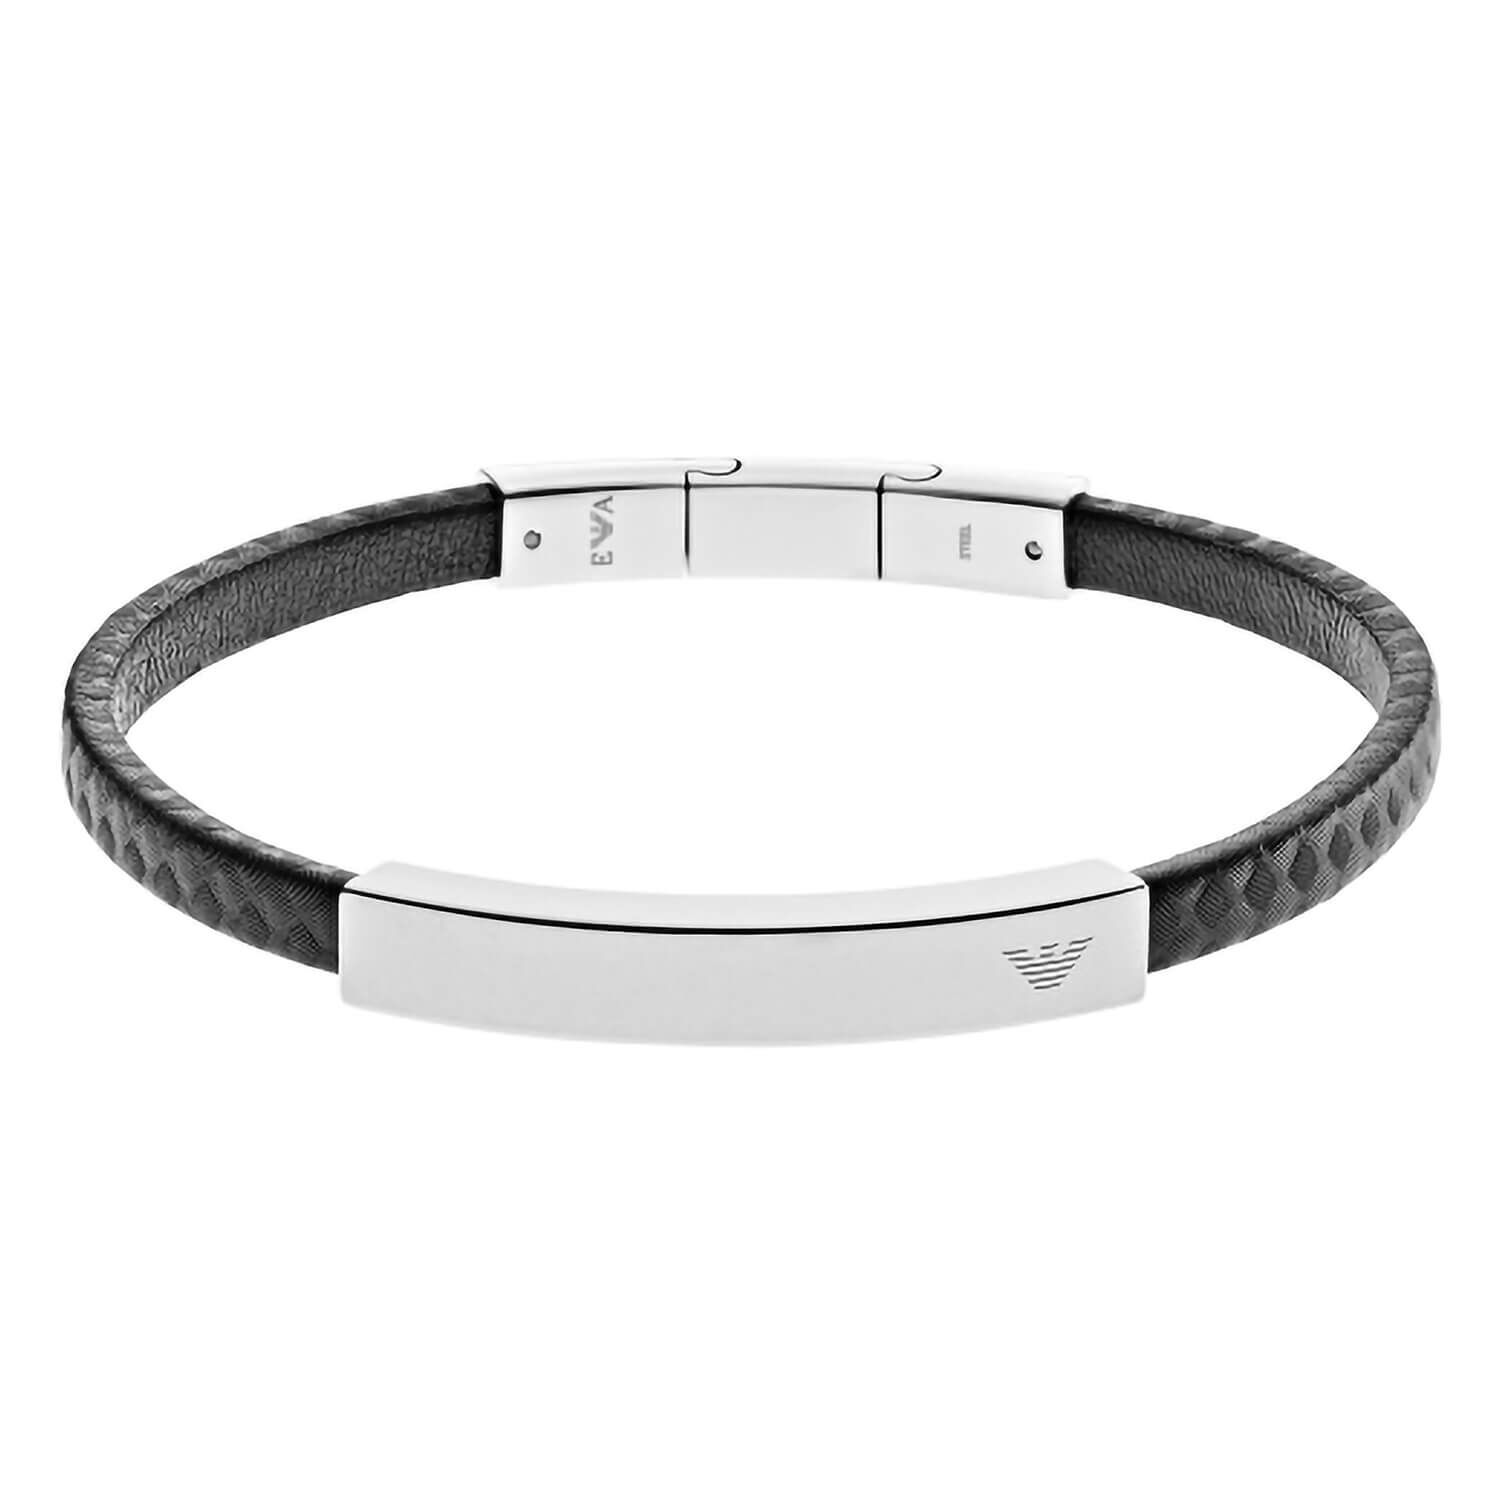 Emporio Armani Bracelet for Men , black Stainless Steel Bracelet,  EGS1624001 : Amazon.co.uk: Fashion